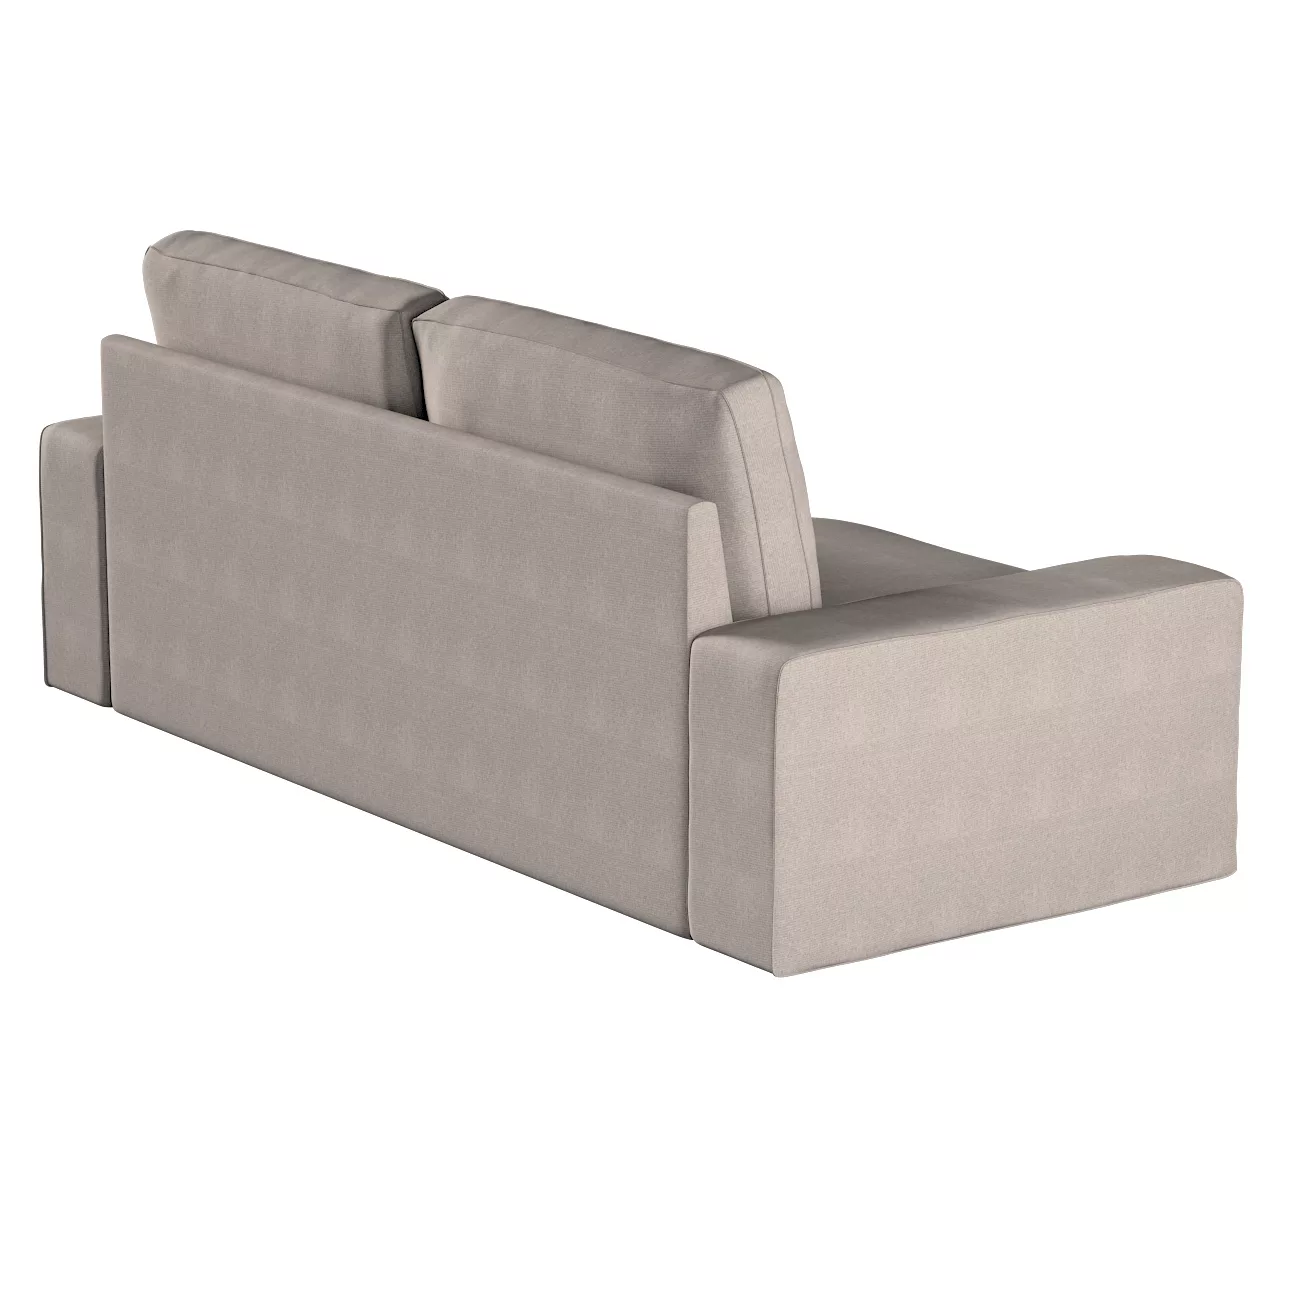 Bezug für Kivik 3-Sitzer Sofa, beige-grau, Bezug für Sofa Kivik 3-Sitzer, E günstig online kaufen